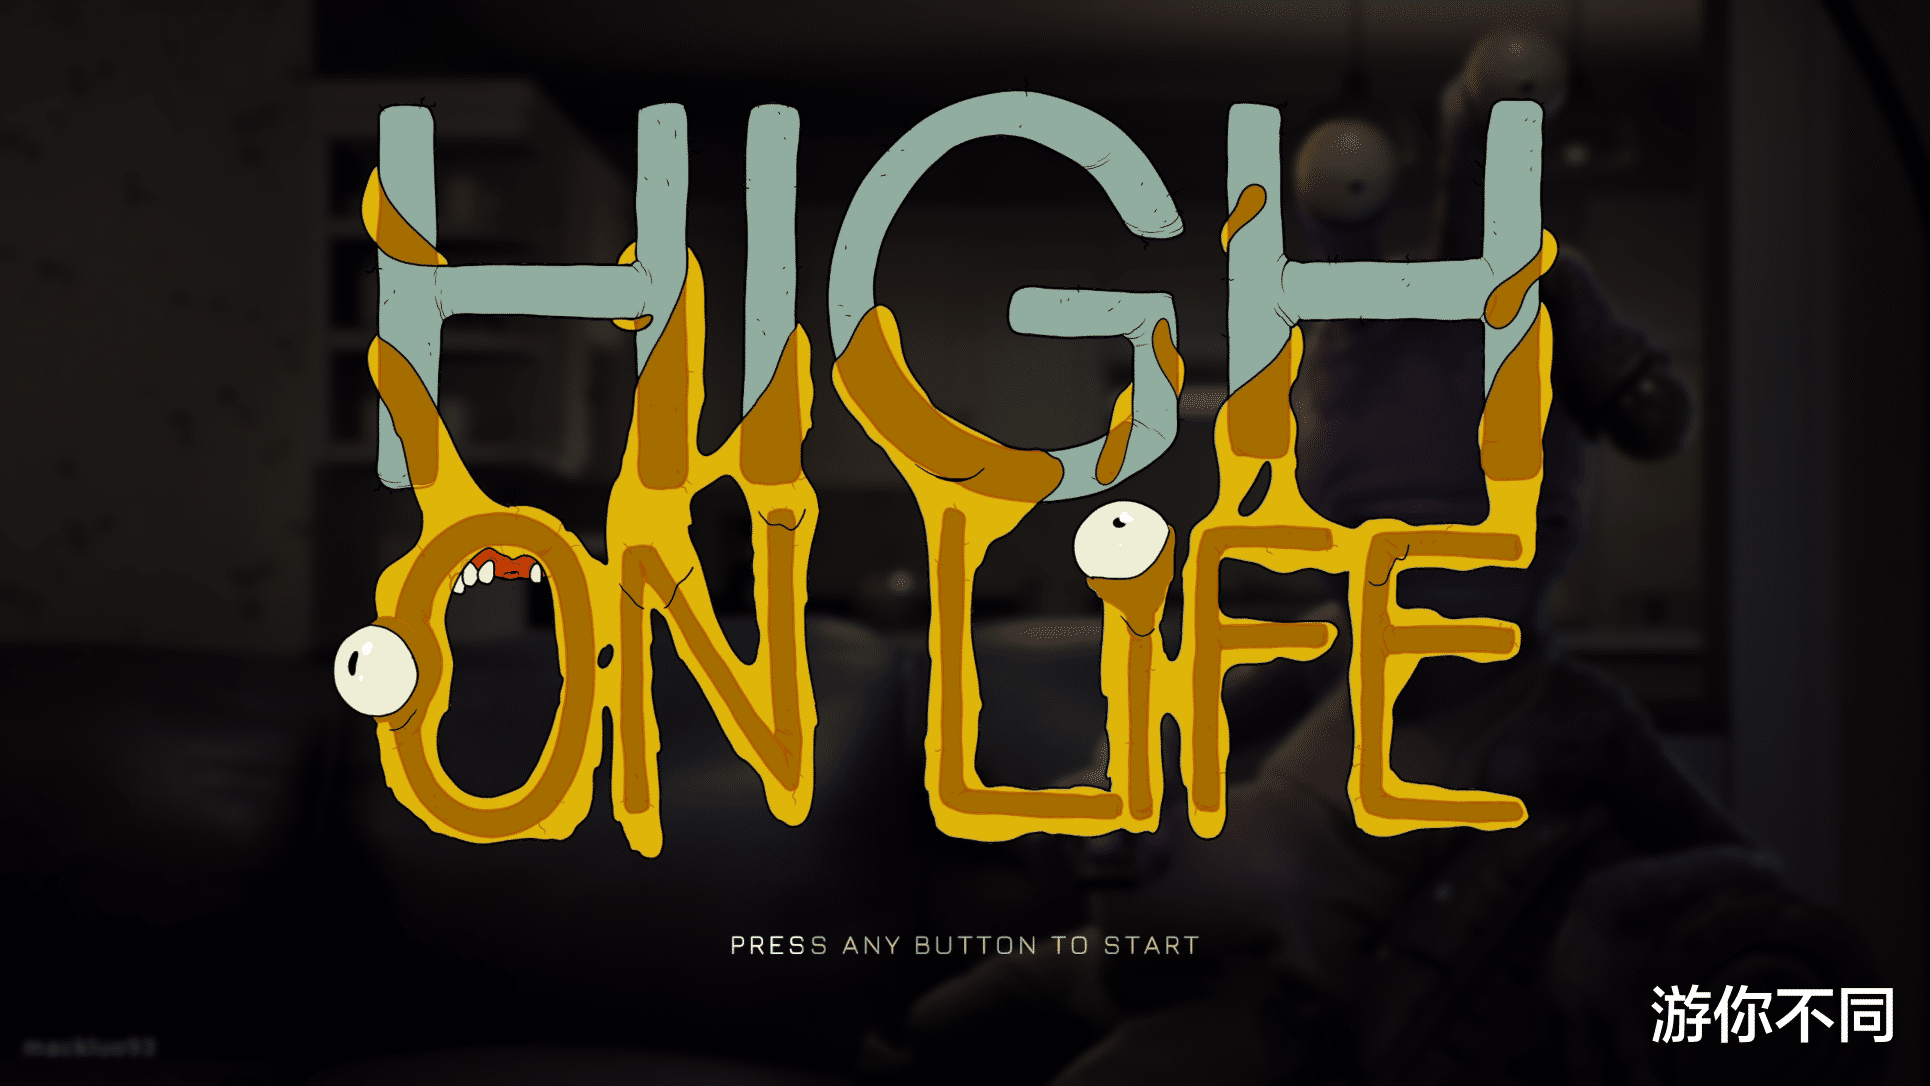 High on Life, 一个别具创意的射击游戏